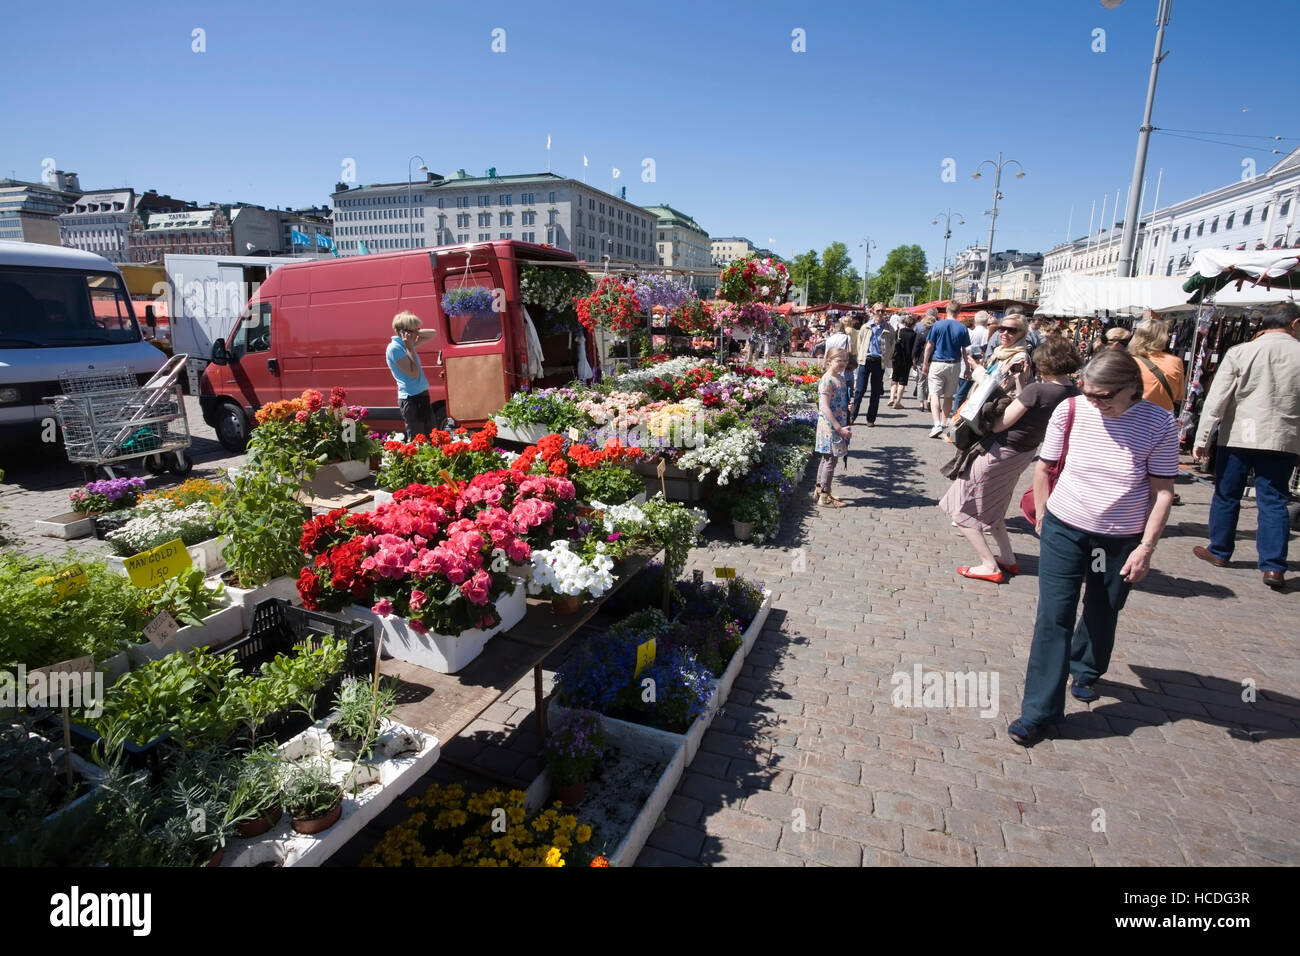 Market square Kauppatori Helsinki Finland Europe Stock Photo